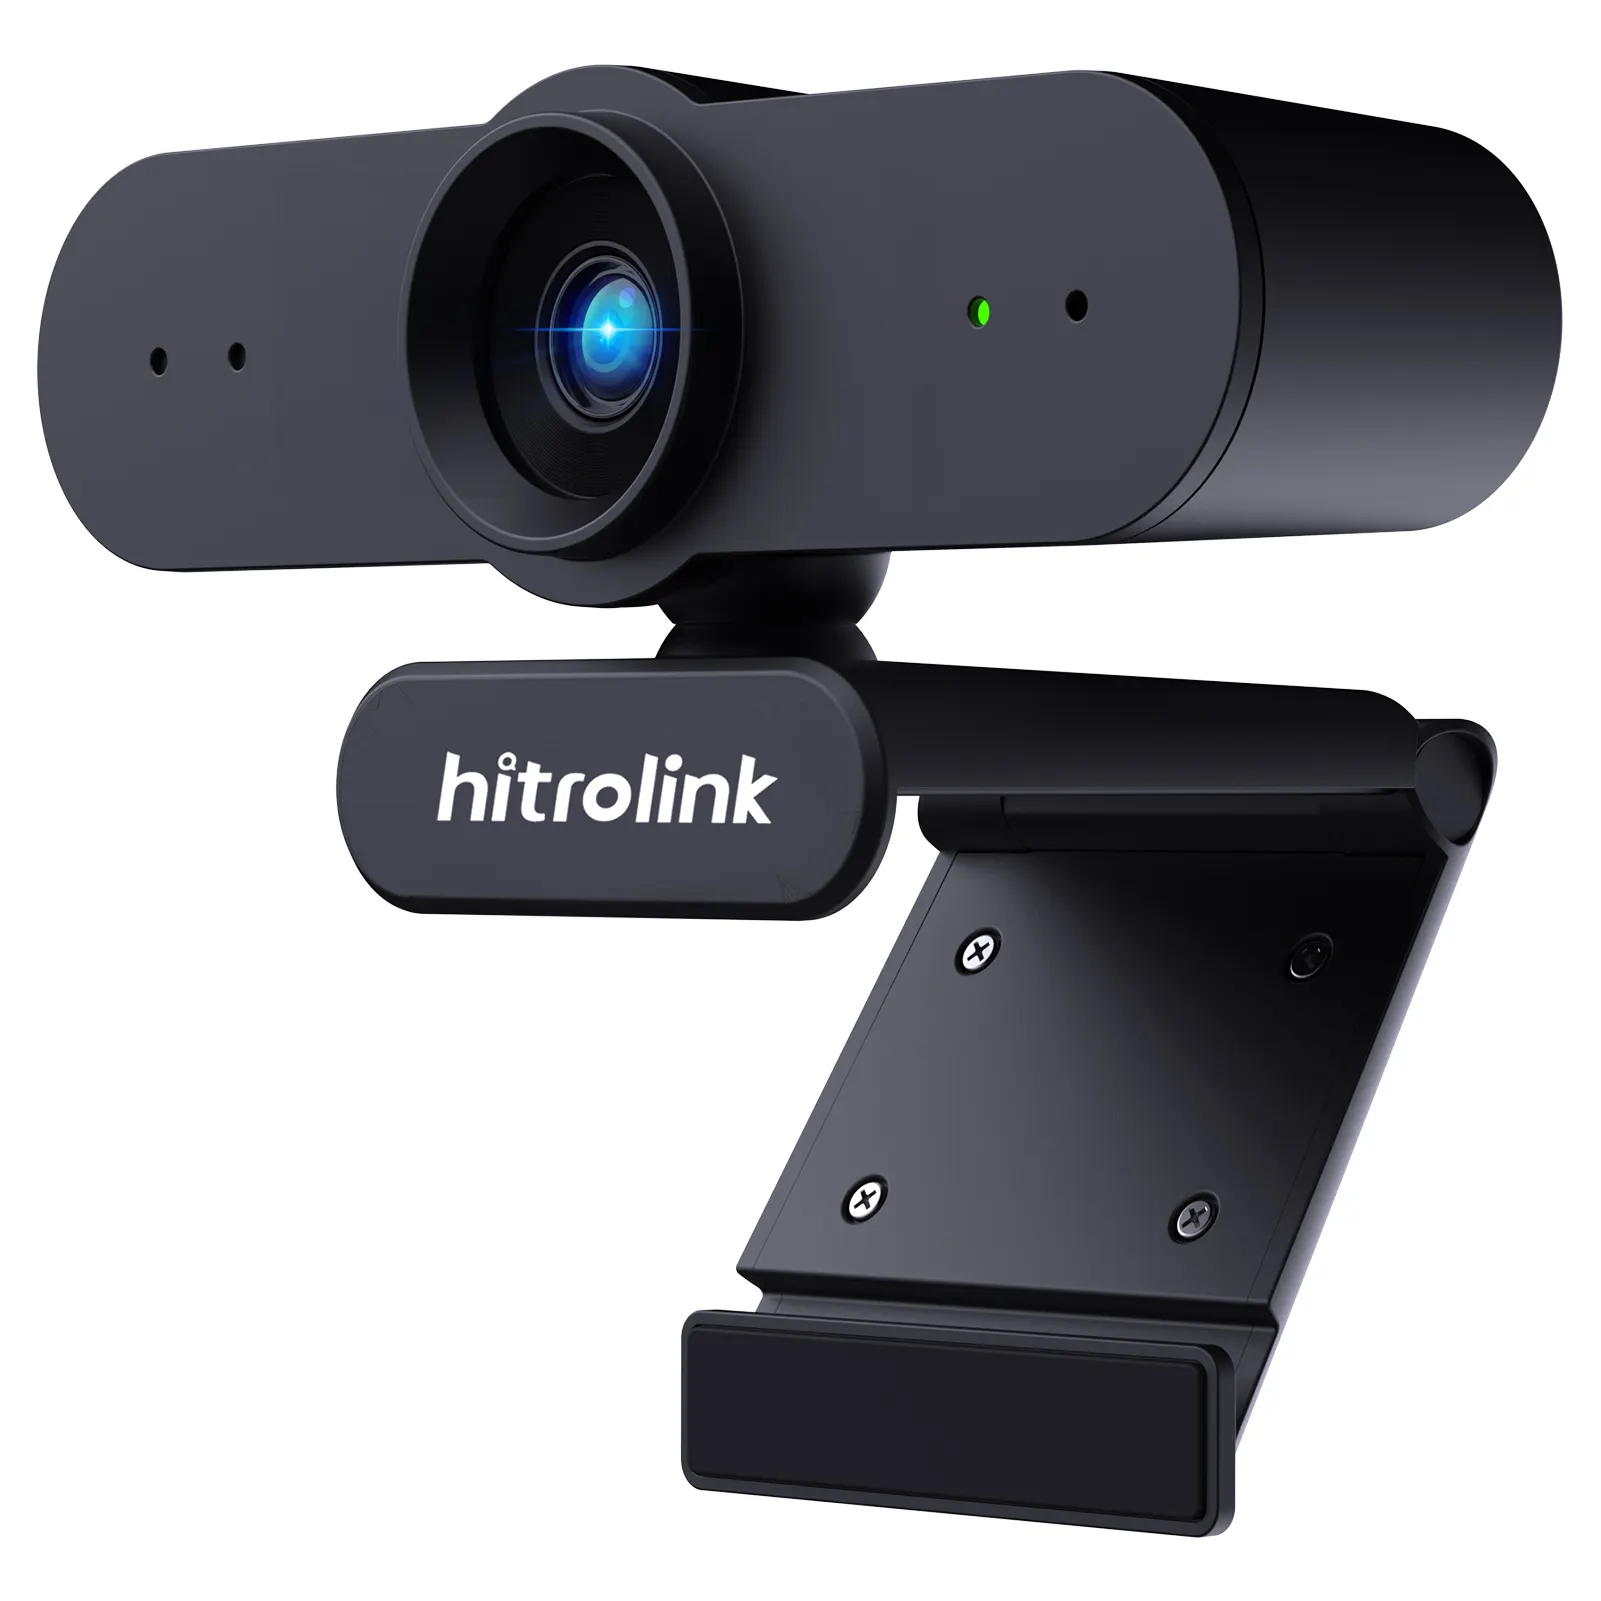 Hitrolink UC300 laptop usb 1080p camera Widescreen Video Calling and Recording Webcam